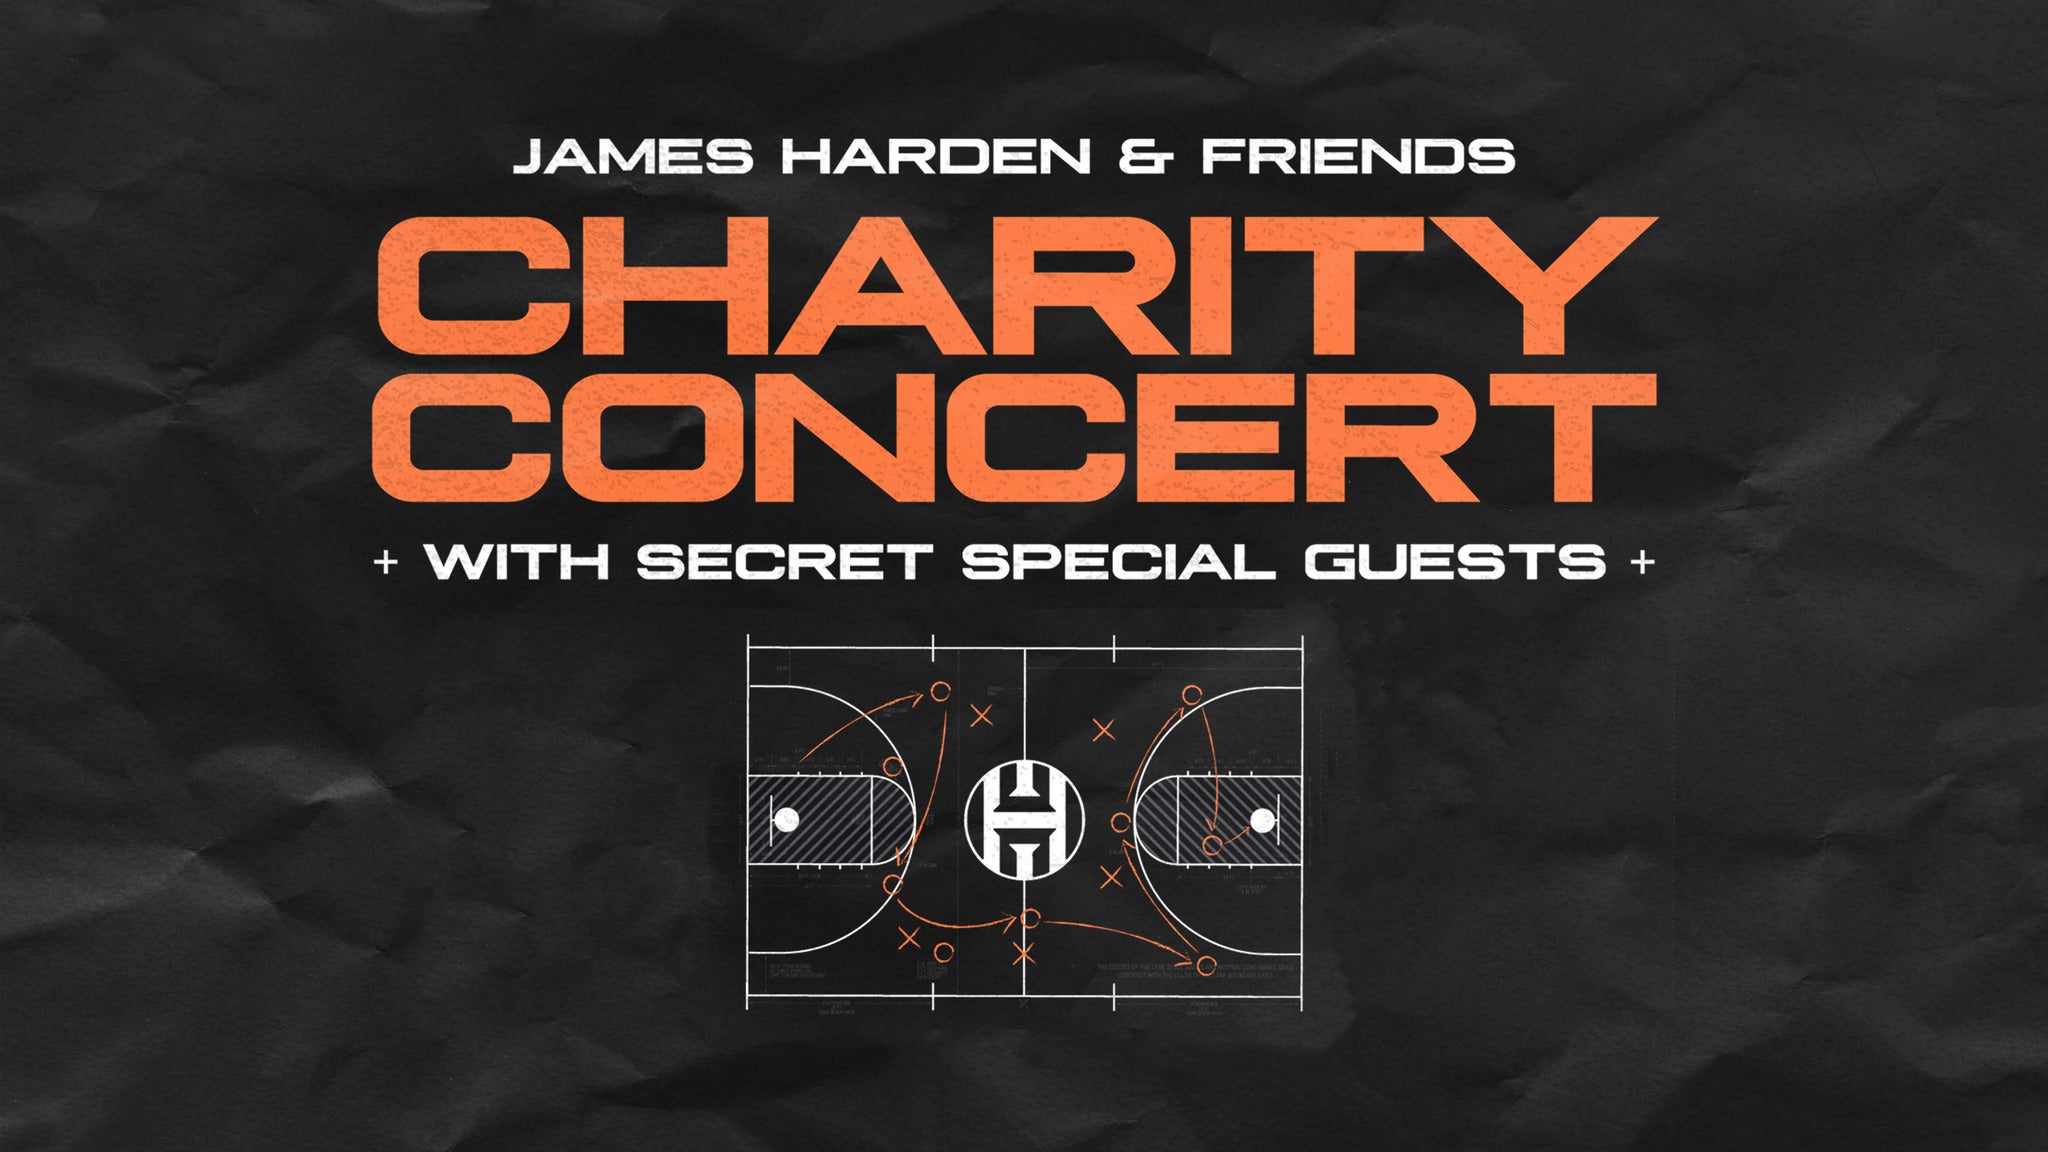 RapCaviar Presents James Harden & Friends... presale code for early tickets in Houston